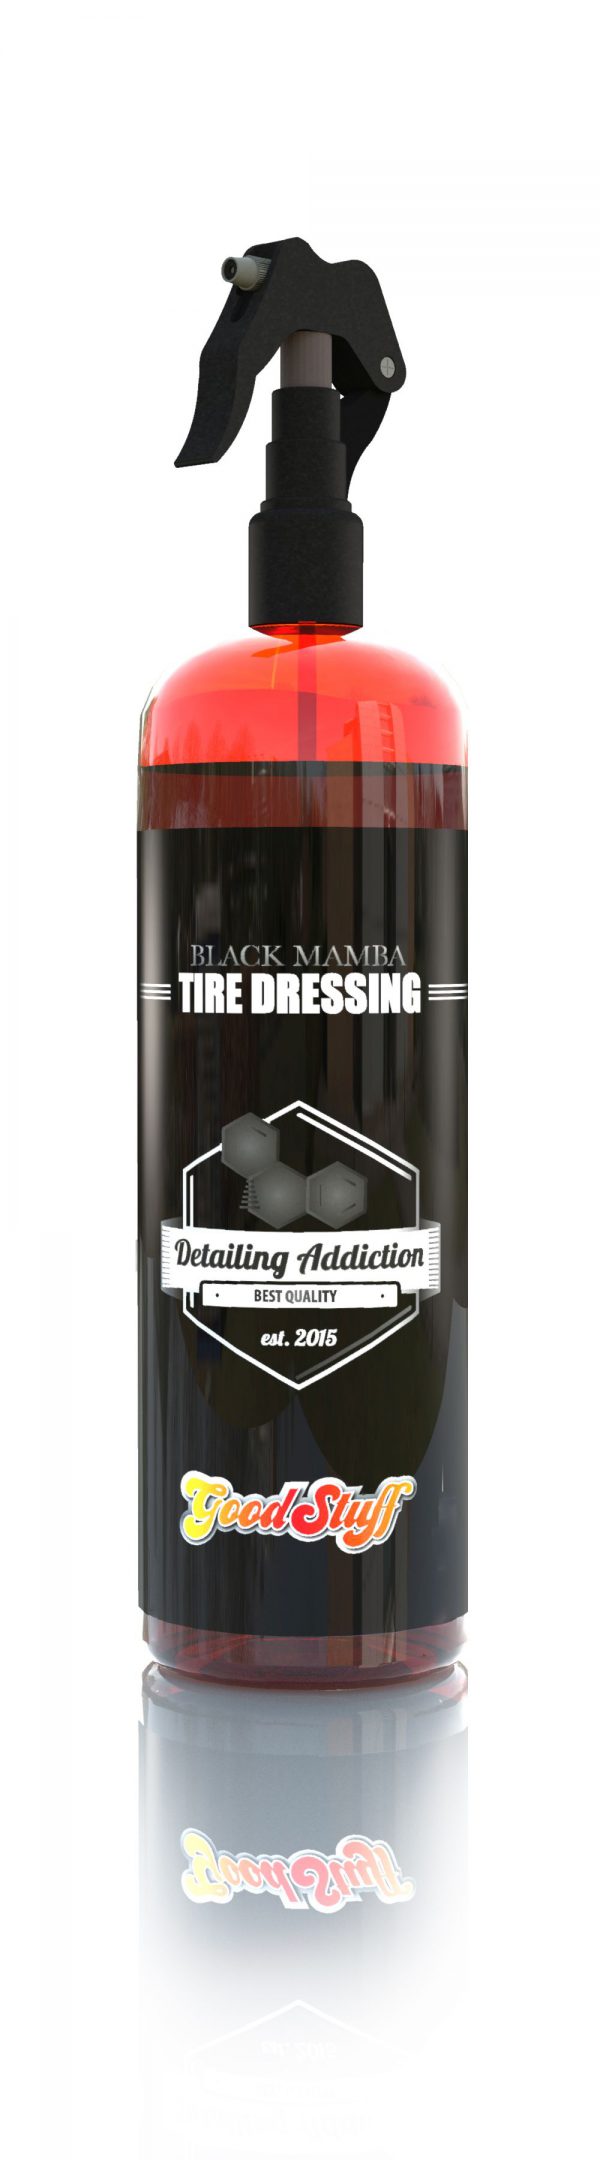 Good Stuff Black Mamba Tire Dressing - matowy dressing do opon 1000 ml